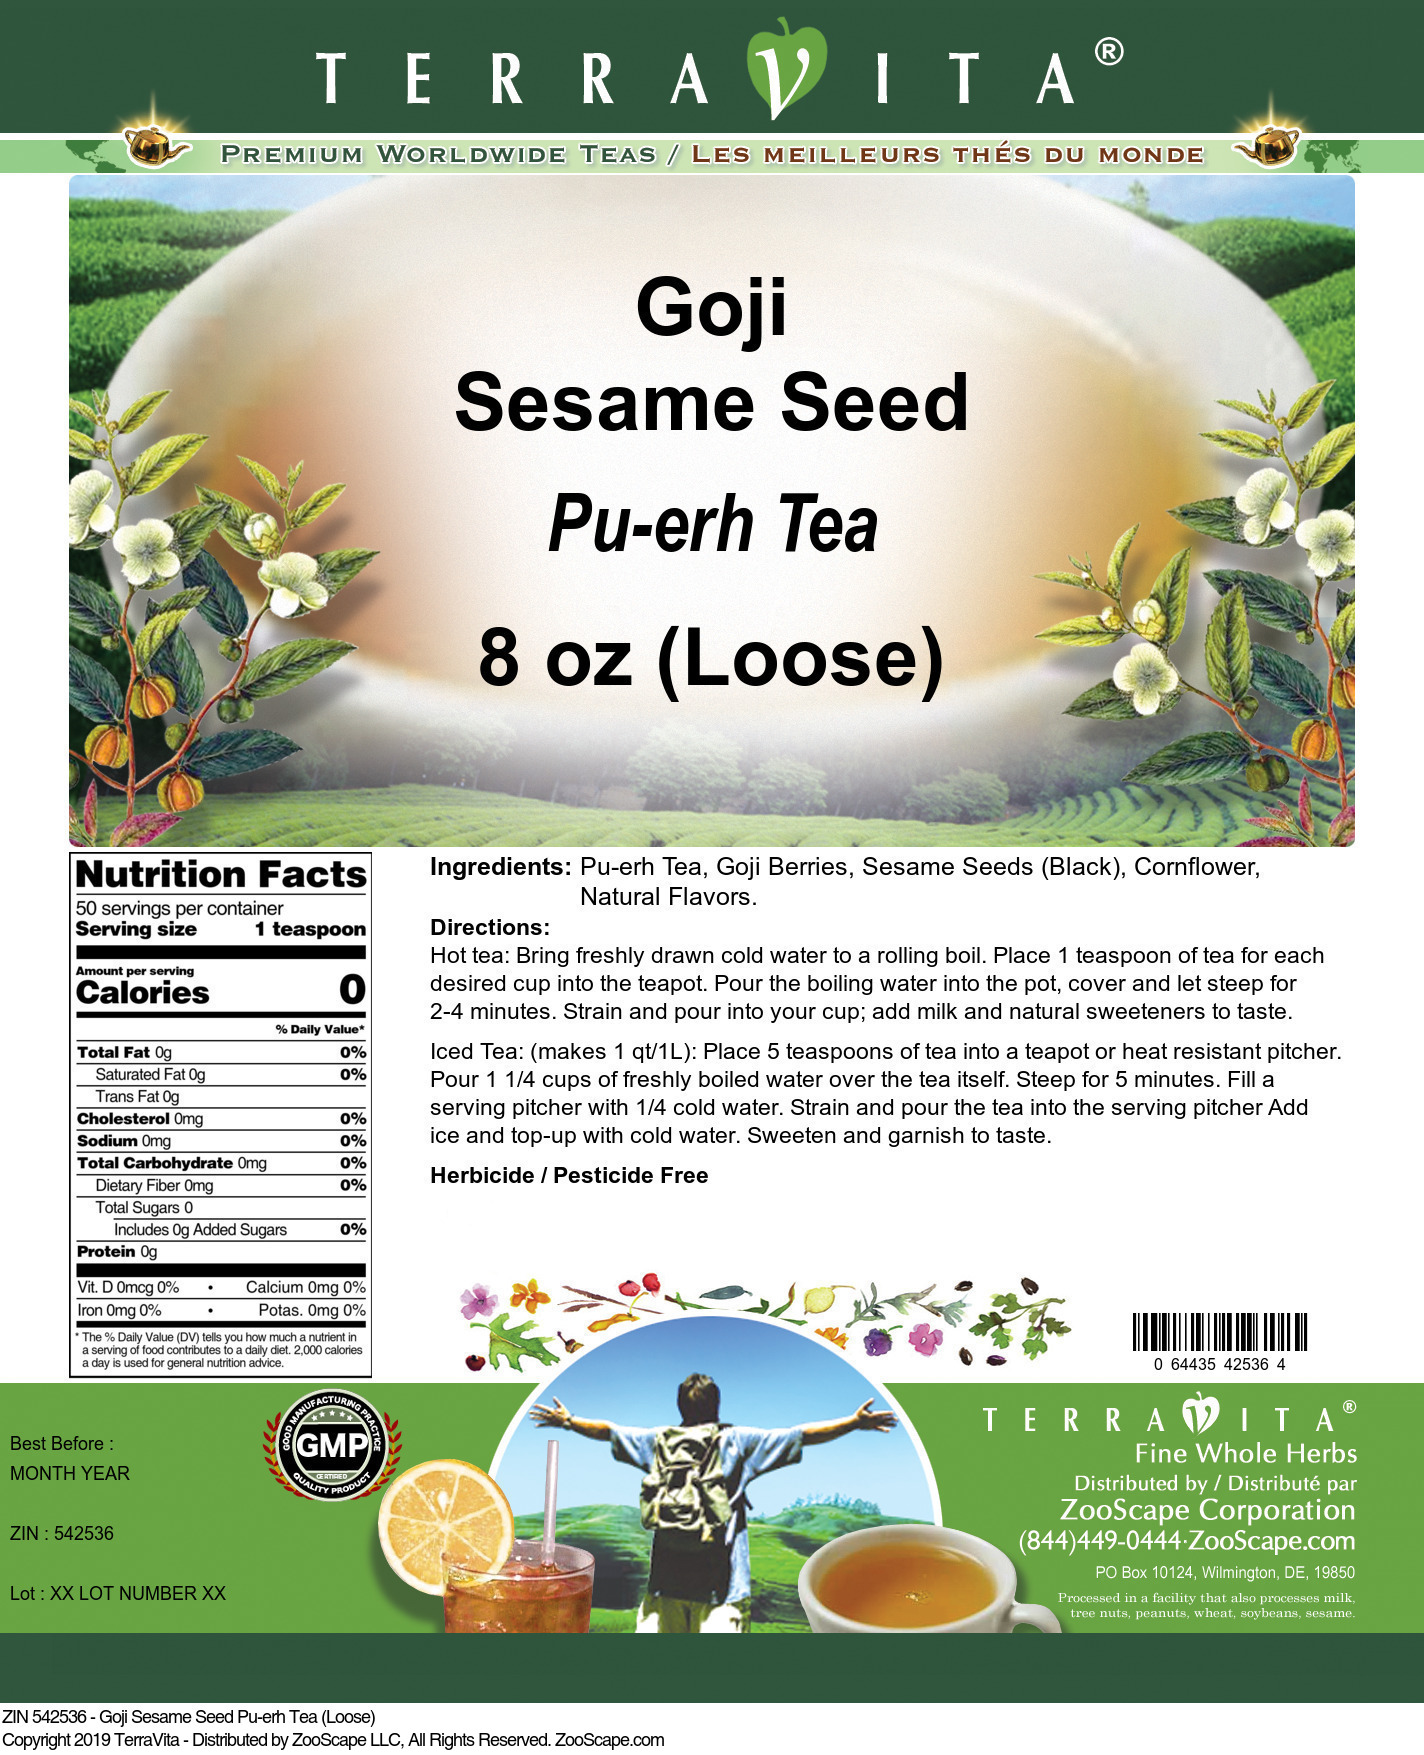 Goji Sesame Seed Pu-erh Tea (Loose) - Label